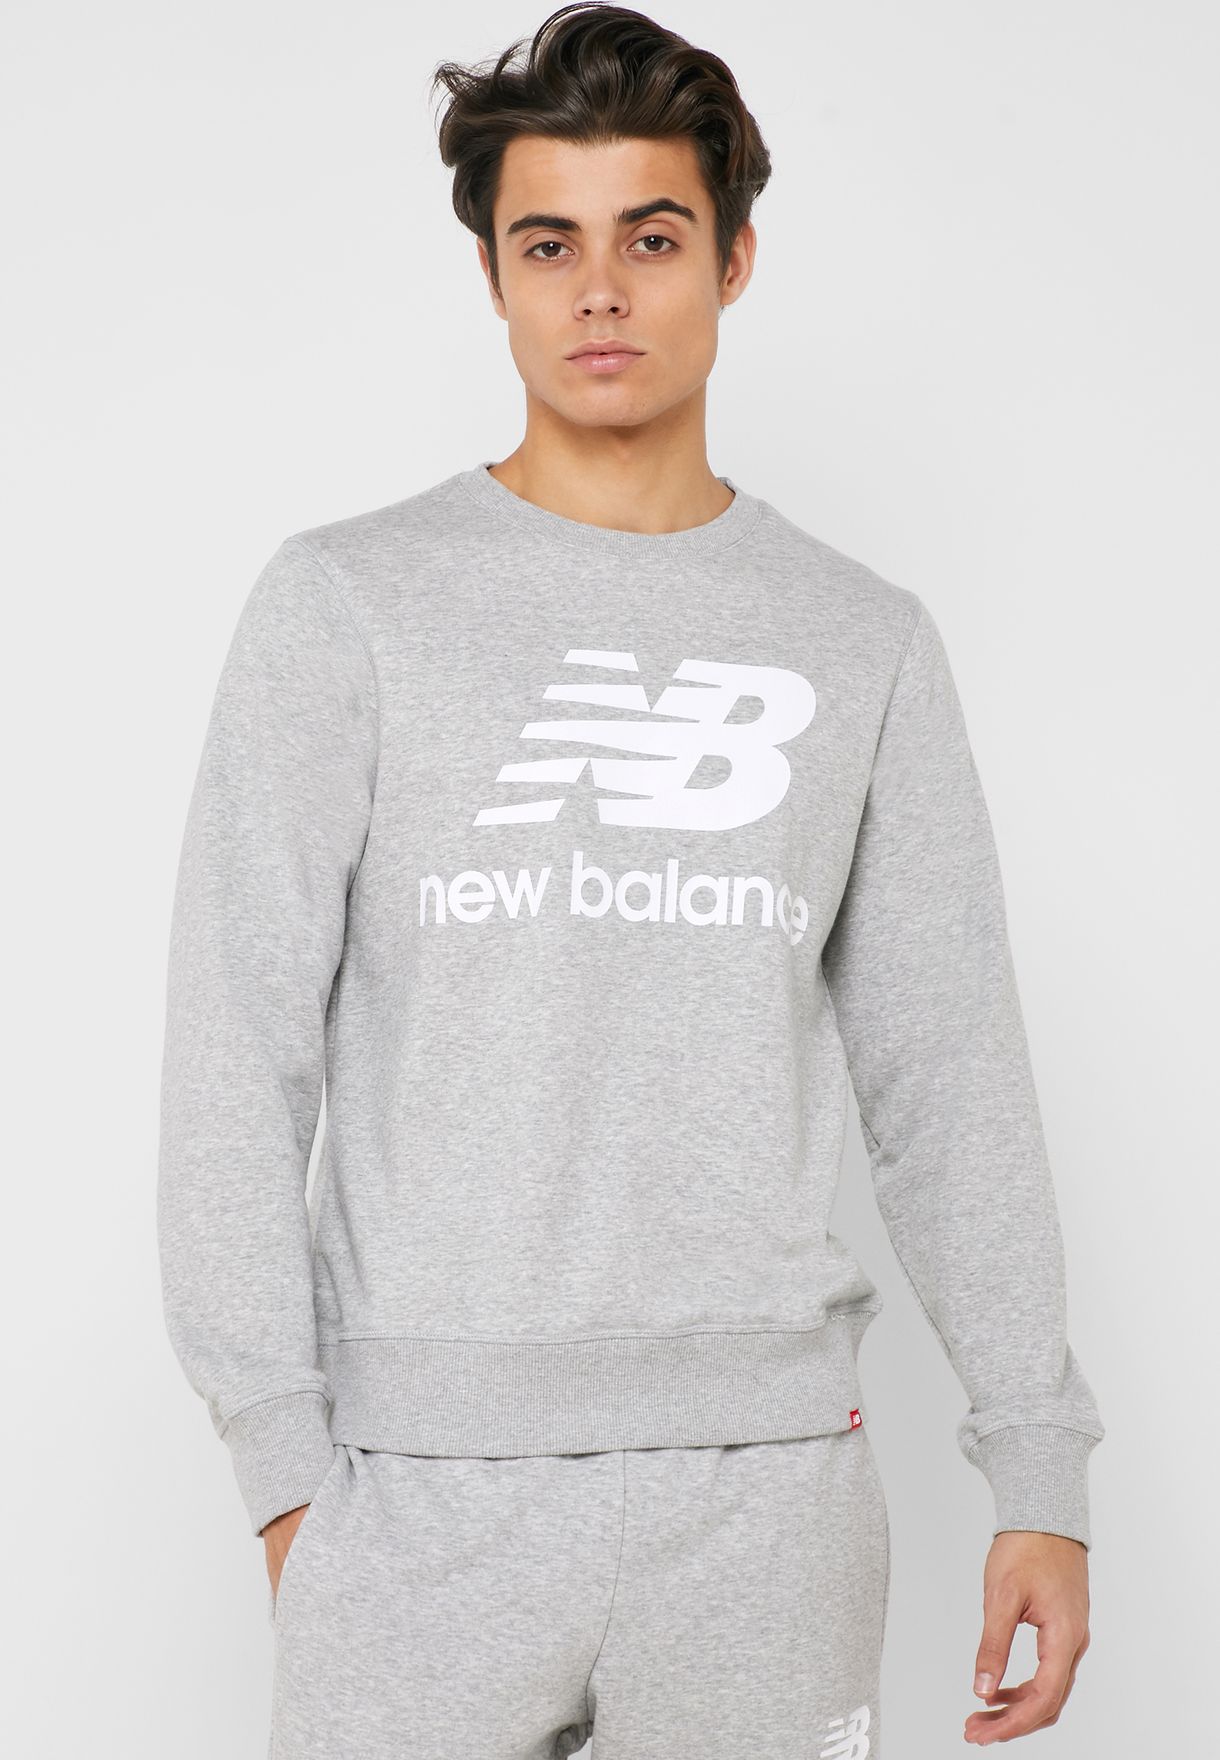 mens new balance sweatshirt